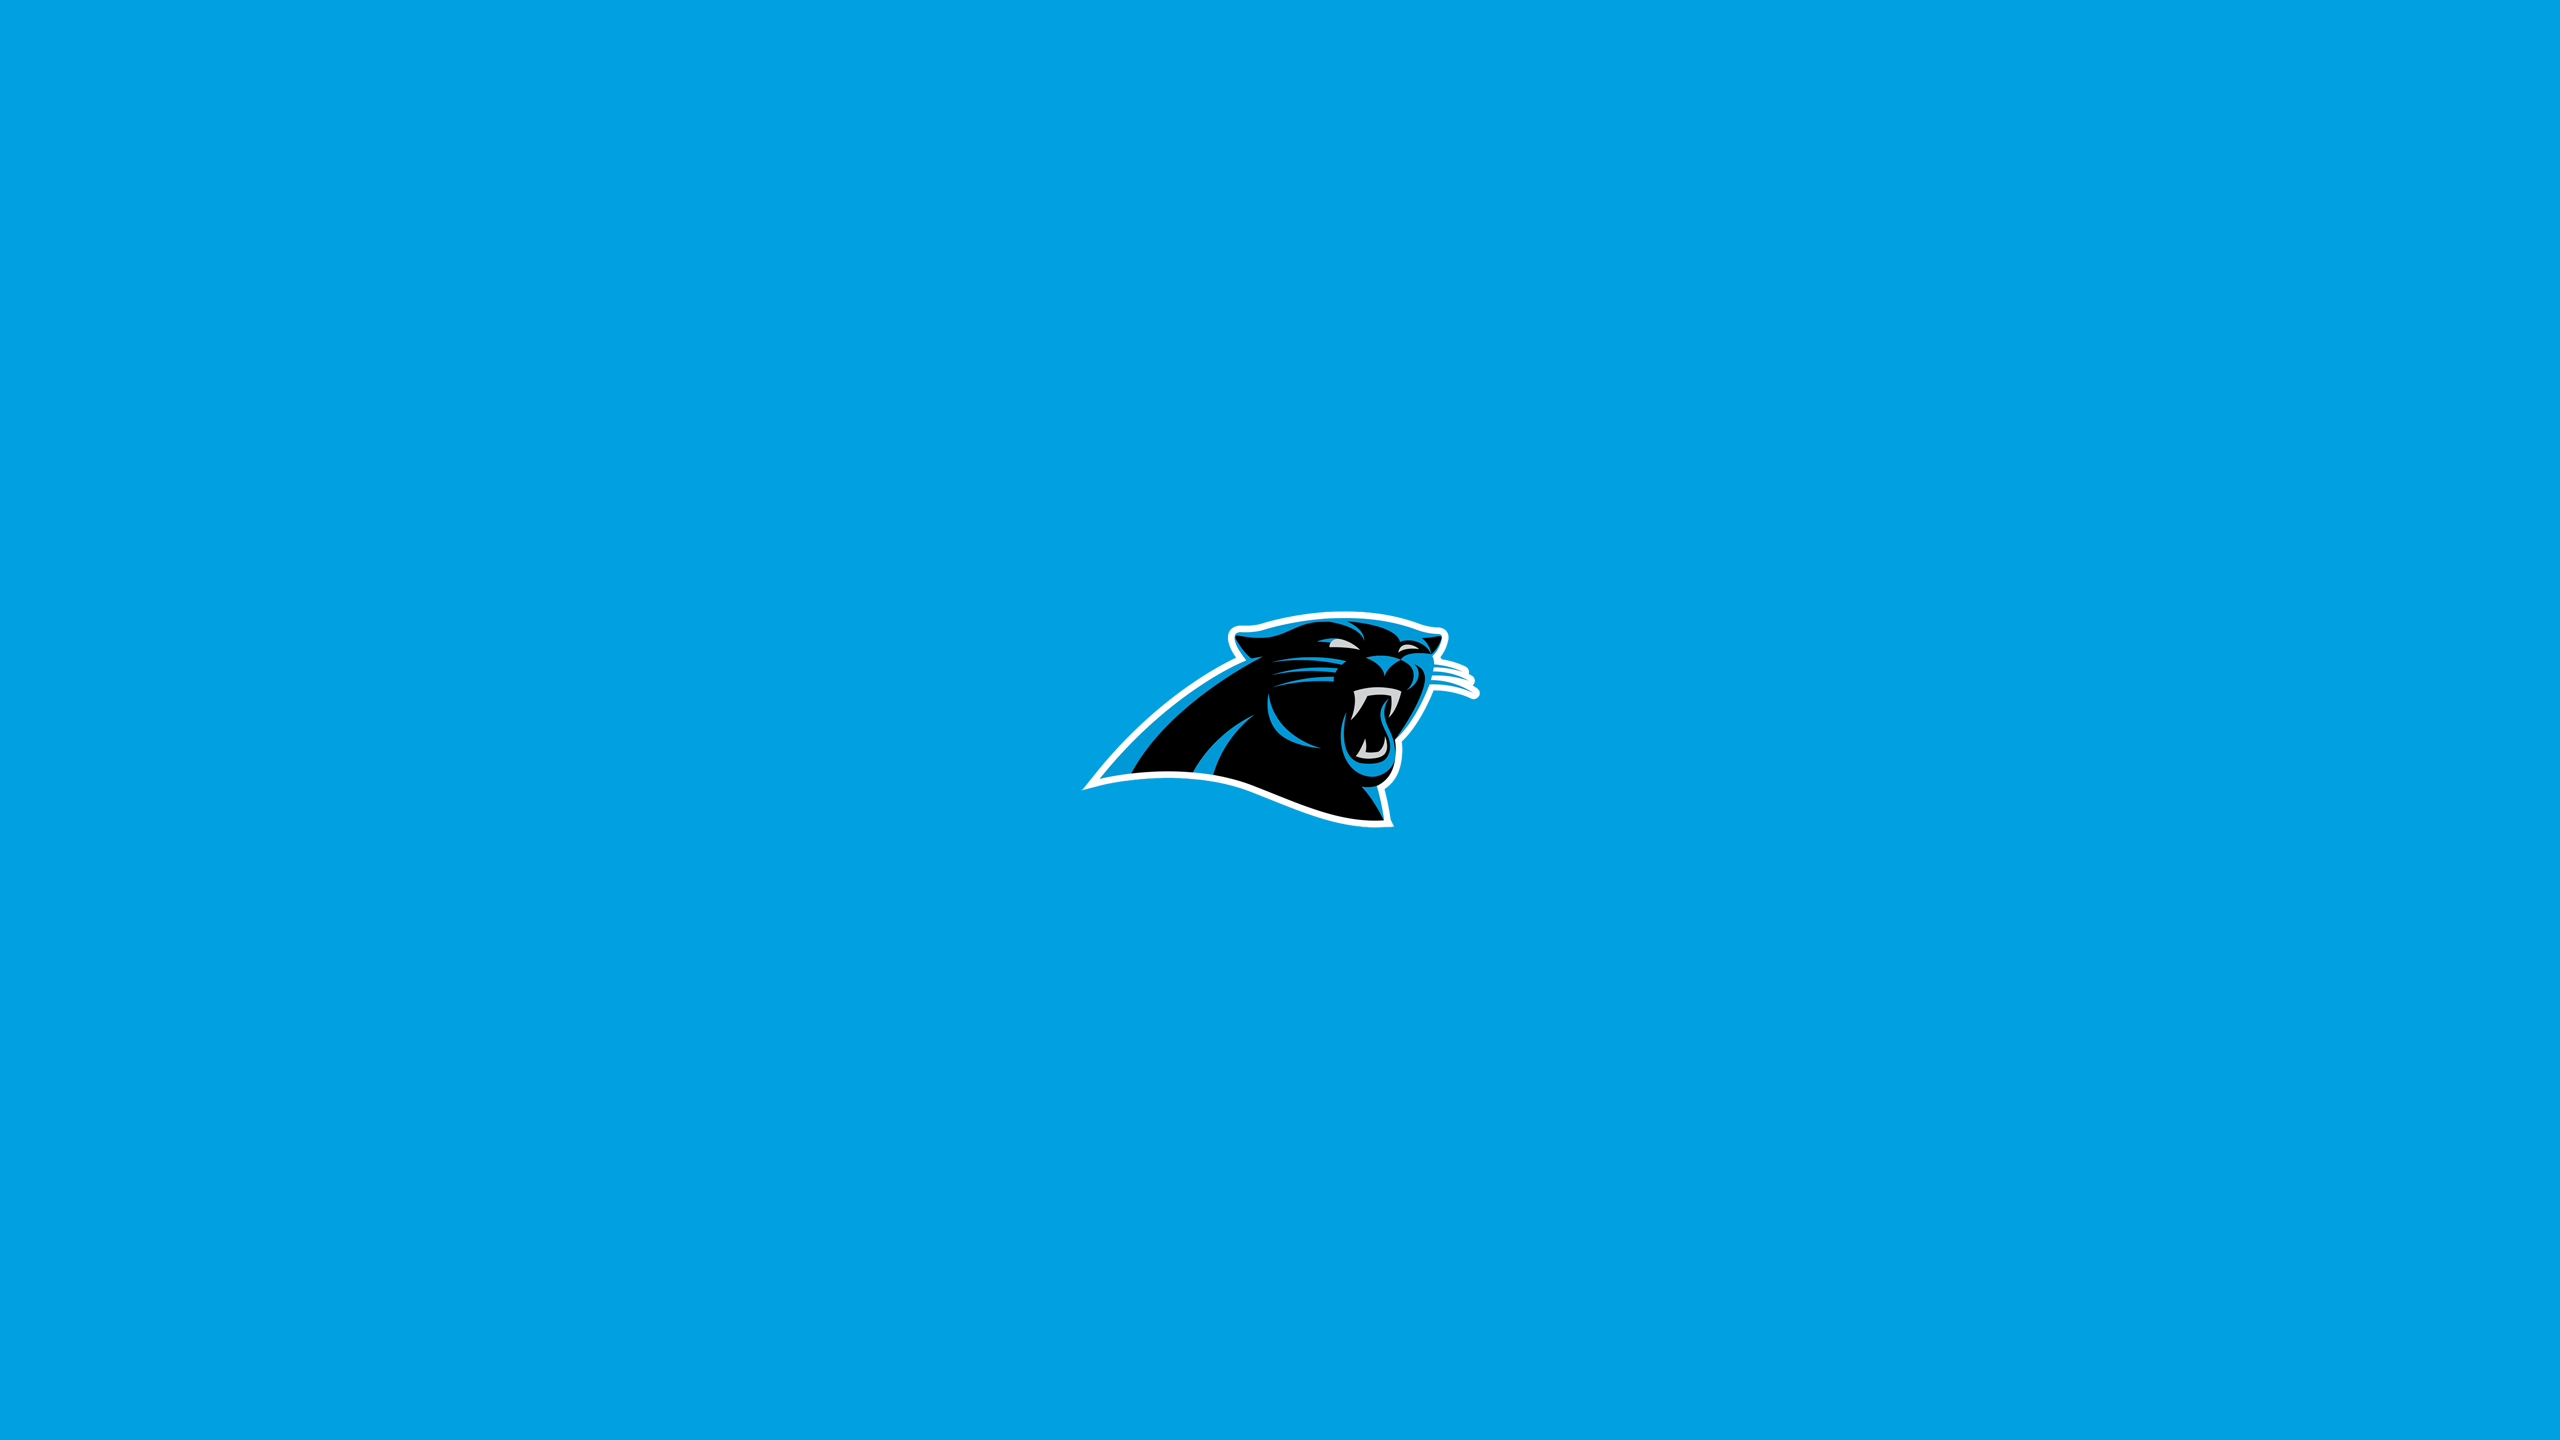 Carolina Panthers - NFL - Square Bettor